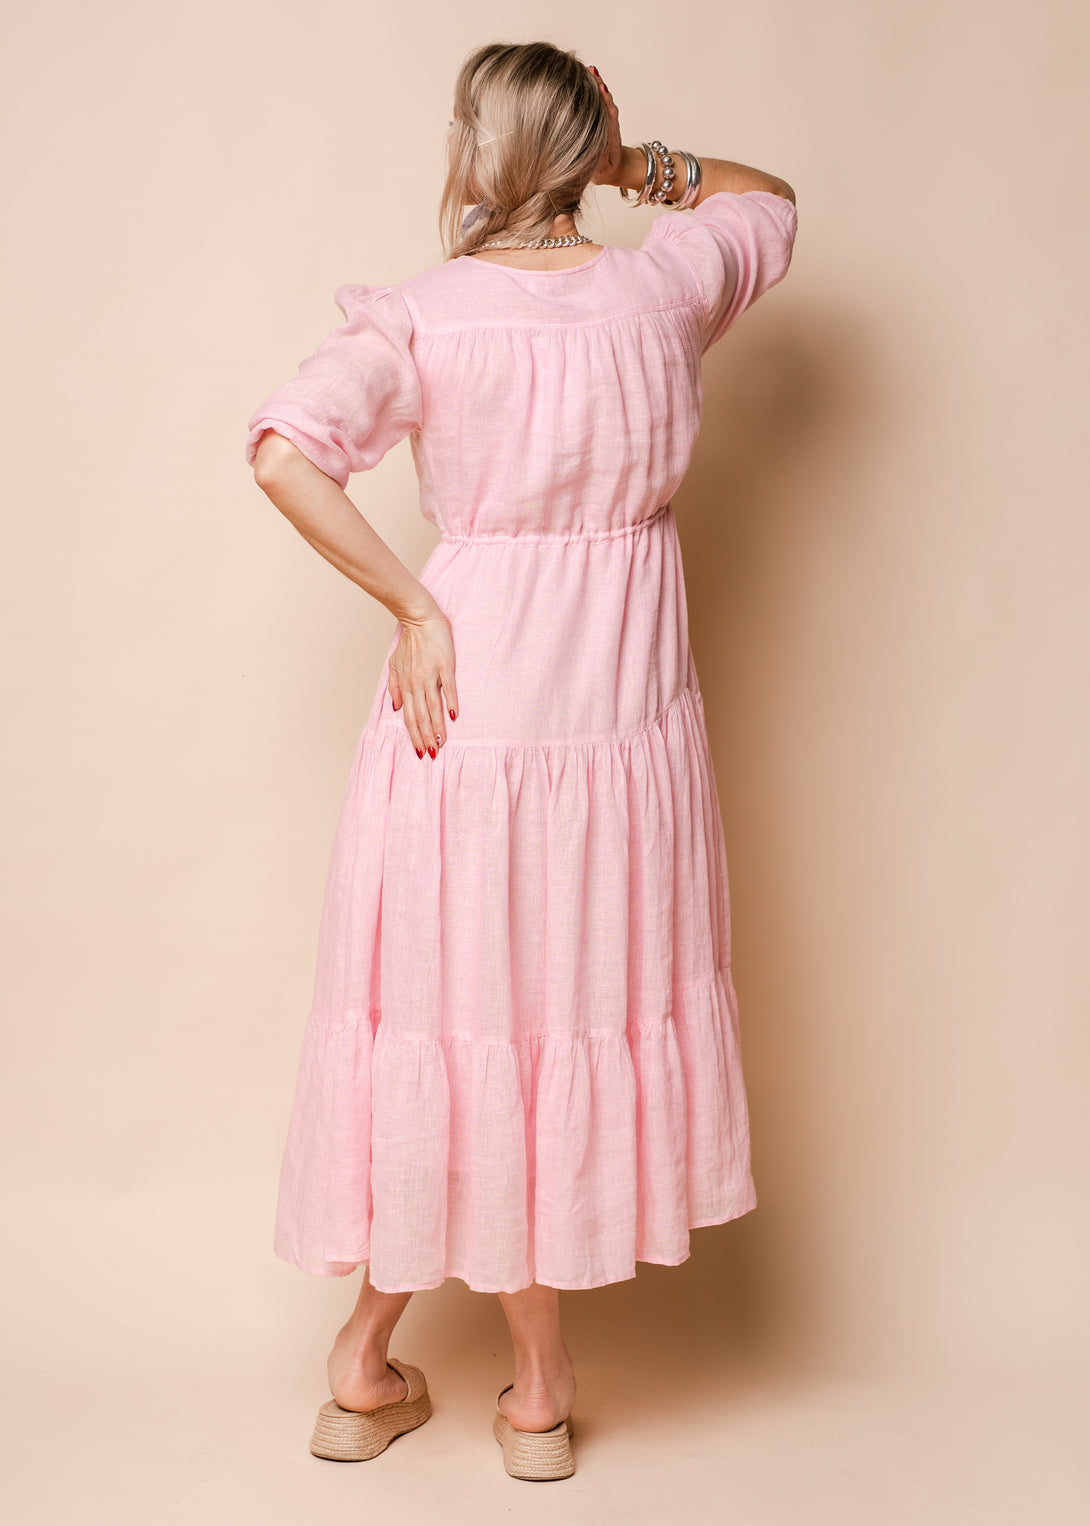 Danica Linen Dress in Blush - Imagine Fashion